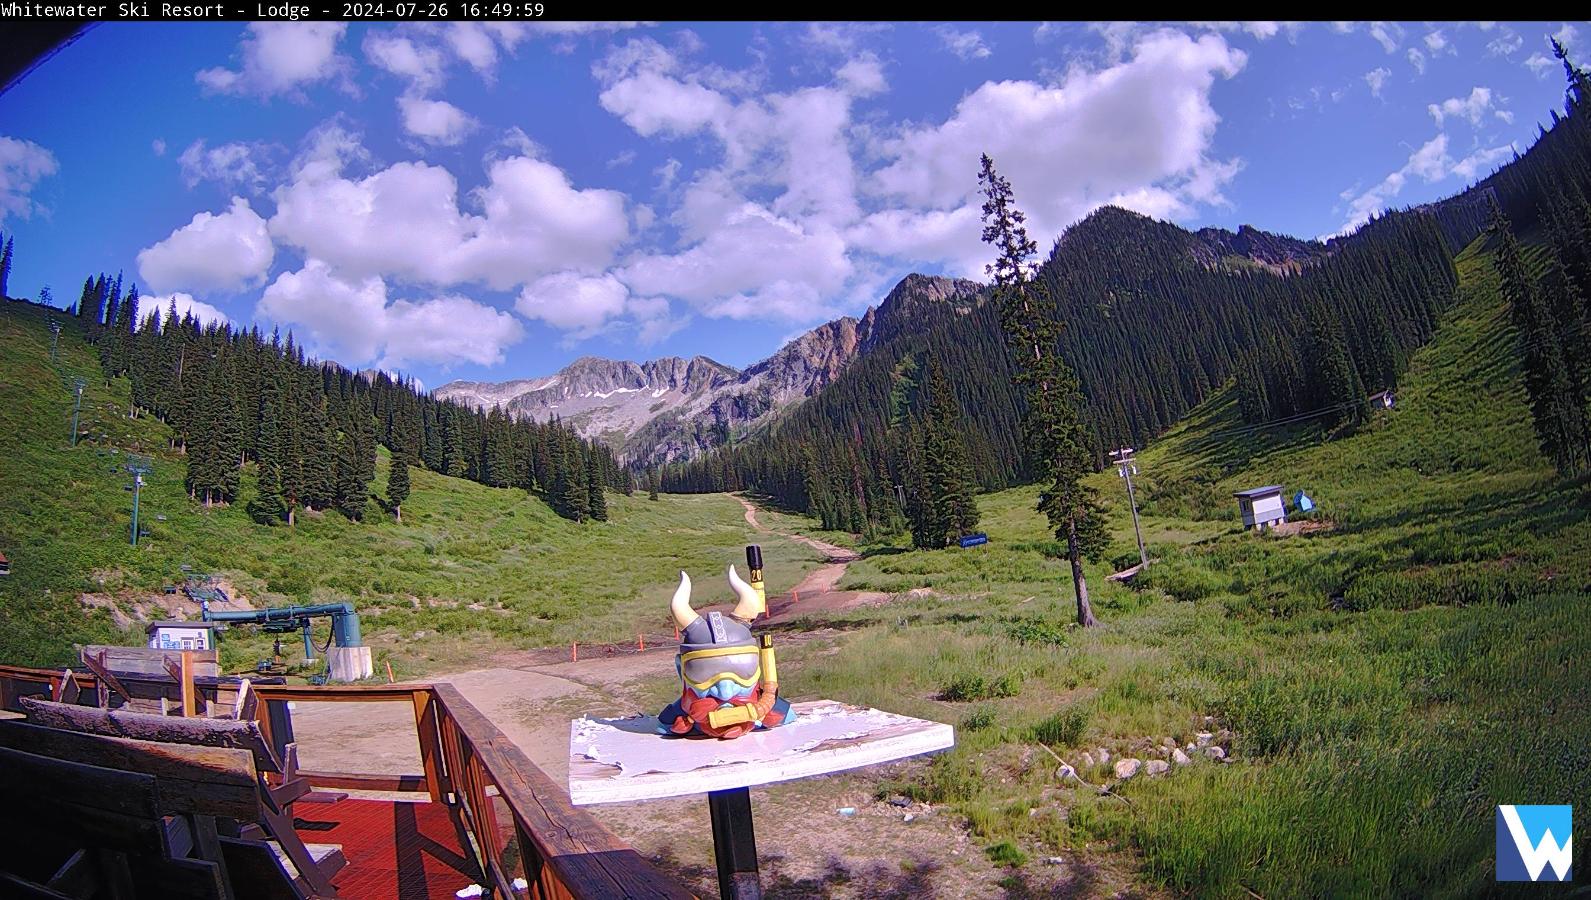 Webcam Whitewater: Lodge Camera